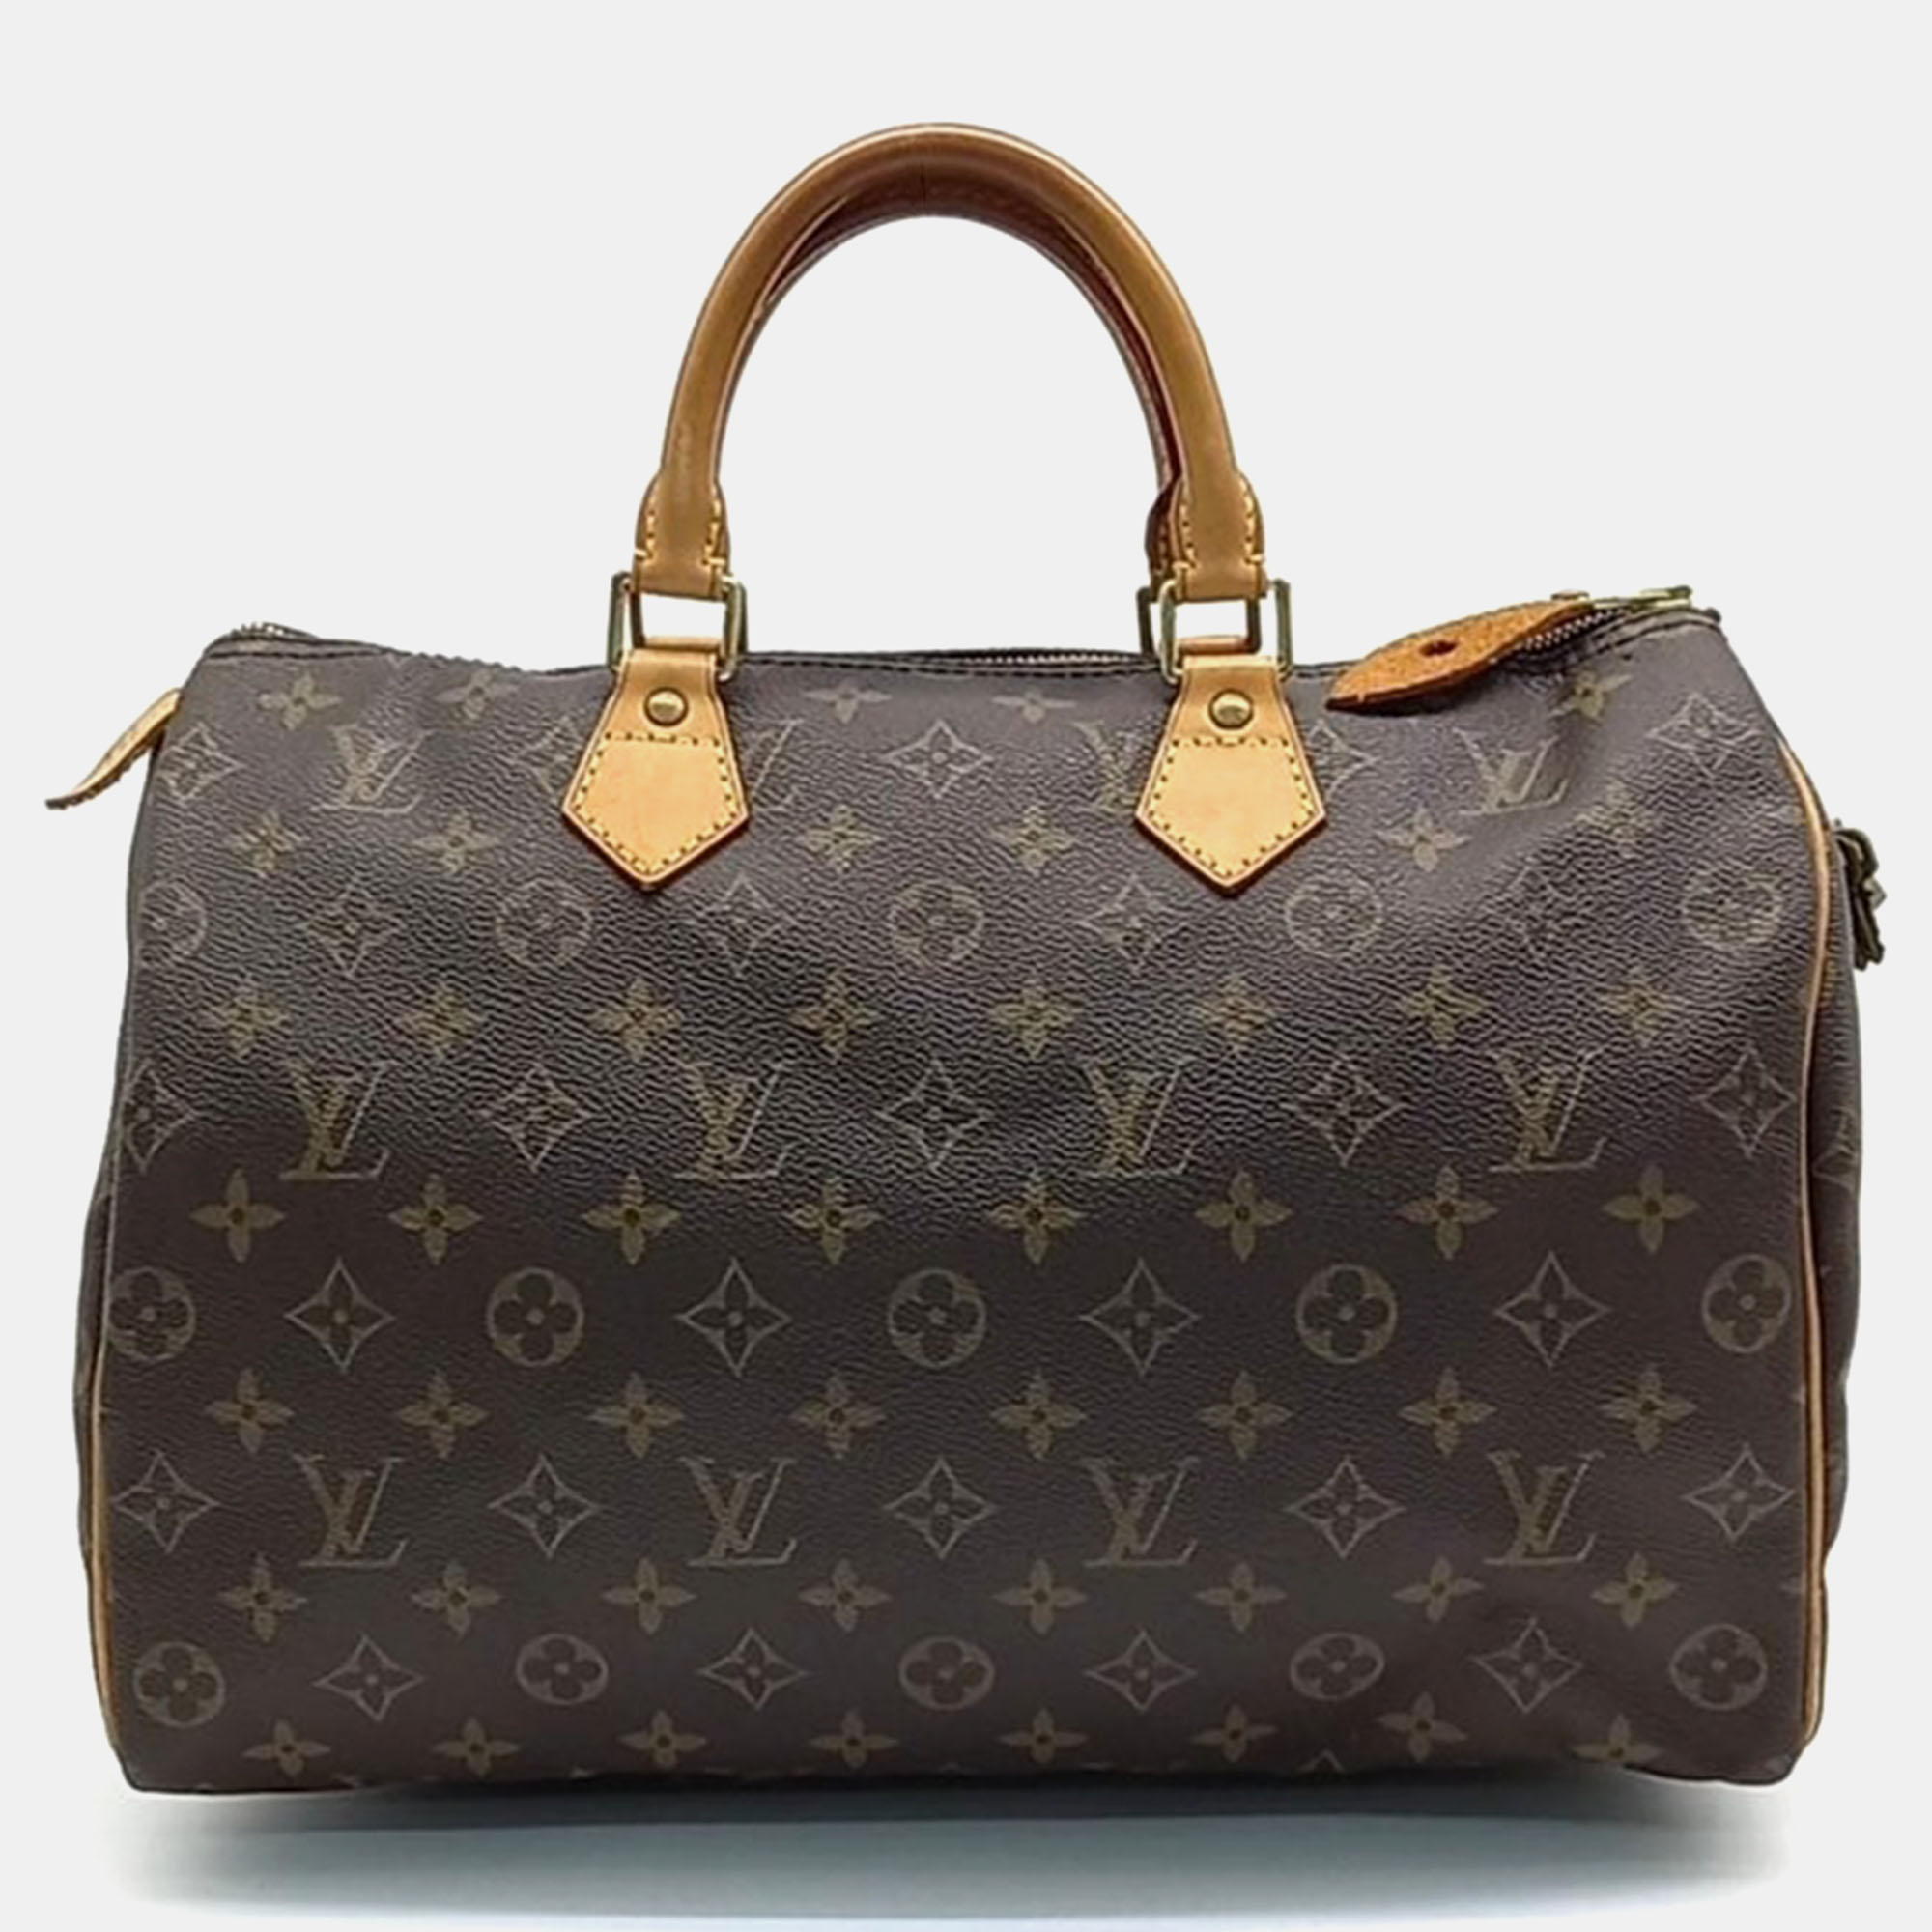 Louis vuitton speedy 35 handbag